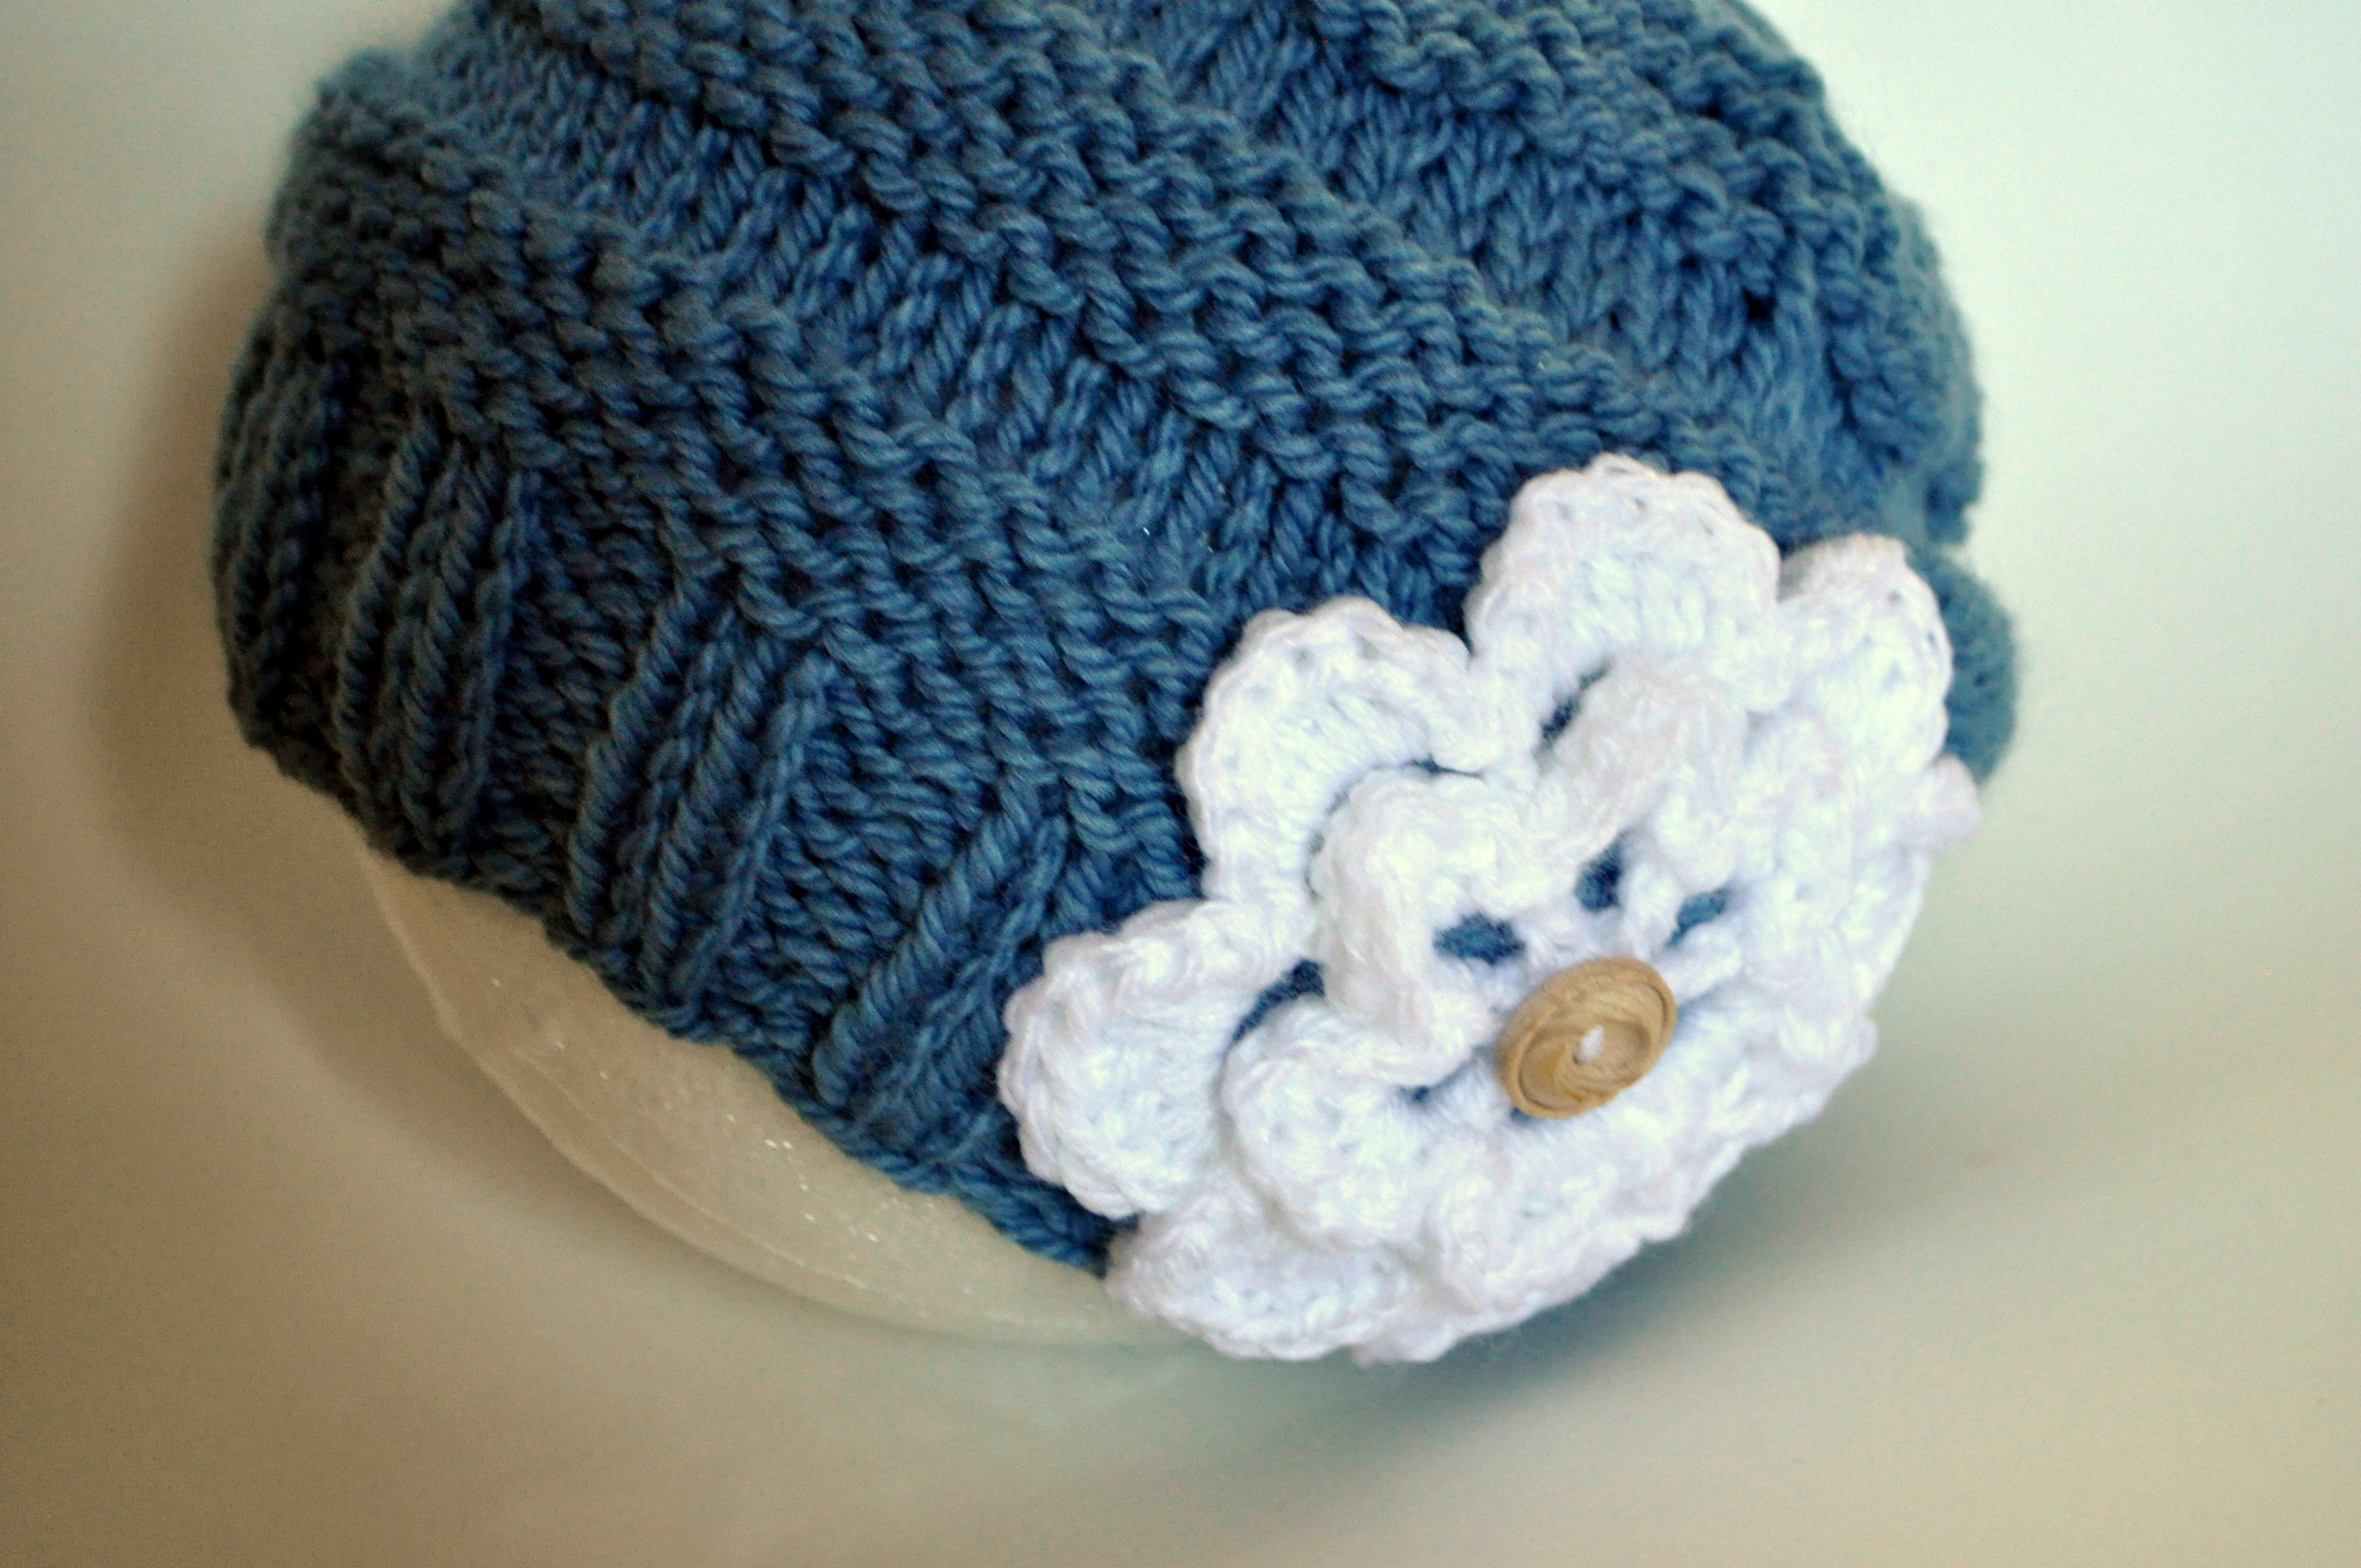 Knitted Flower Patterns Free Free Pattern Knit Slouch Flowered Hat Classy Crochet